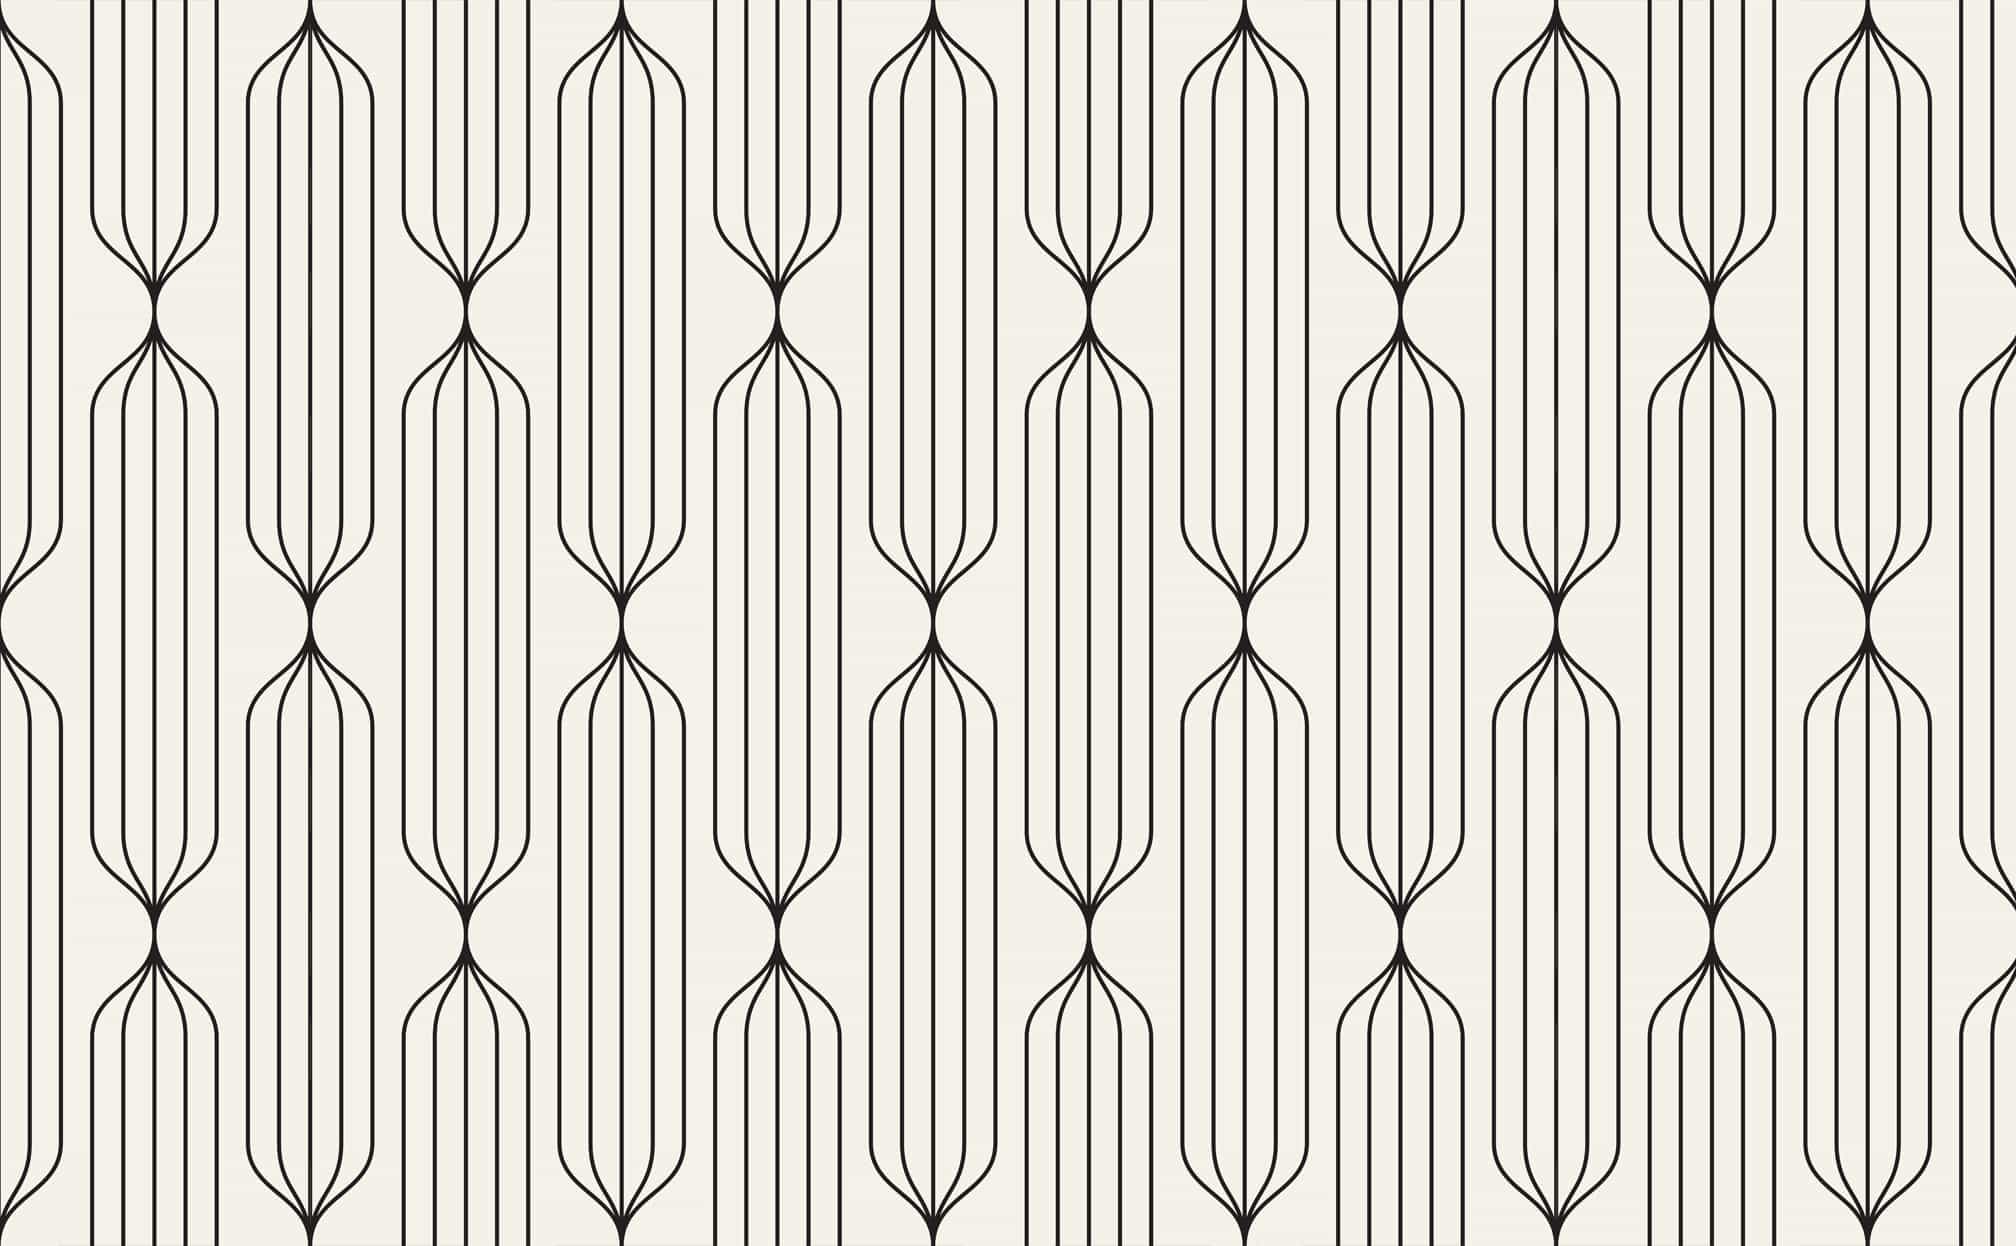 Union Station Wallpaper Pattern by Walls Need Love®